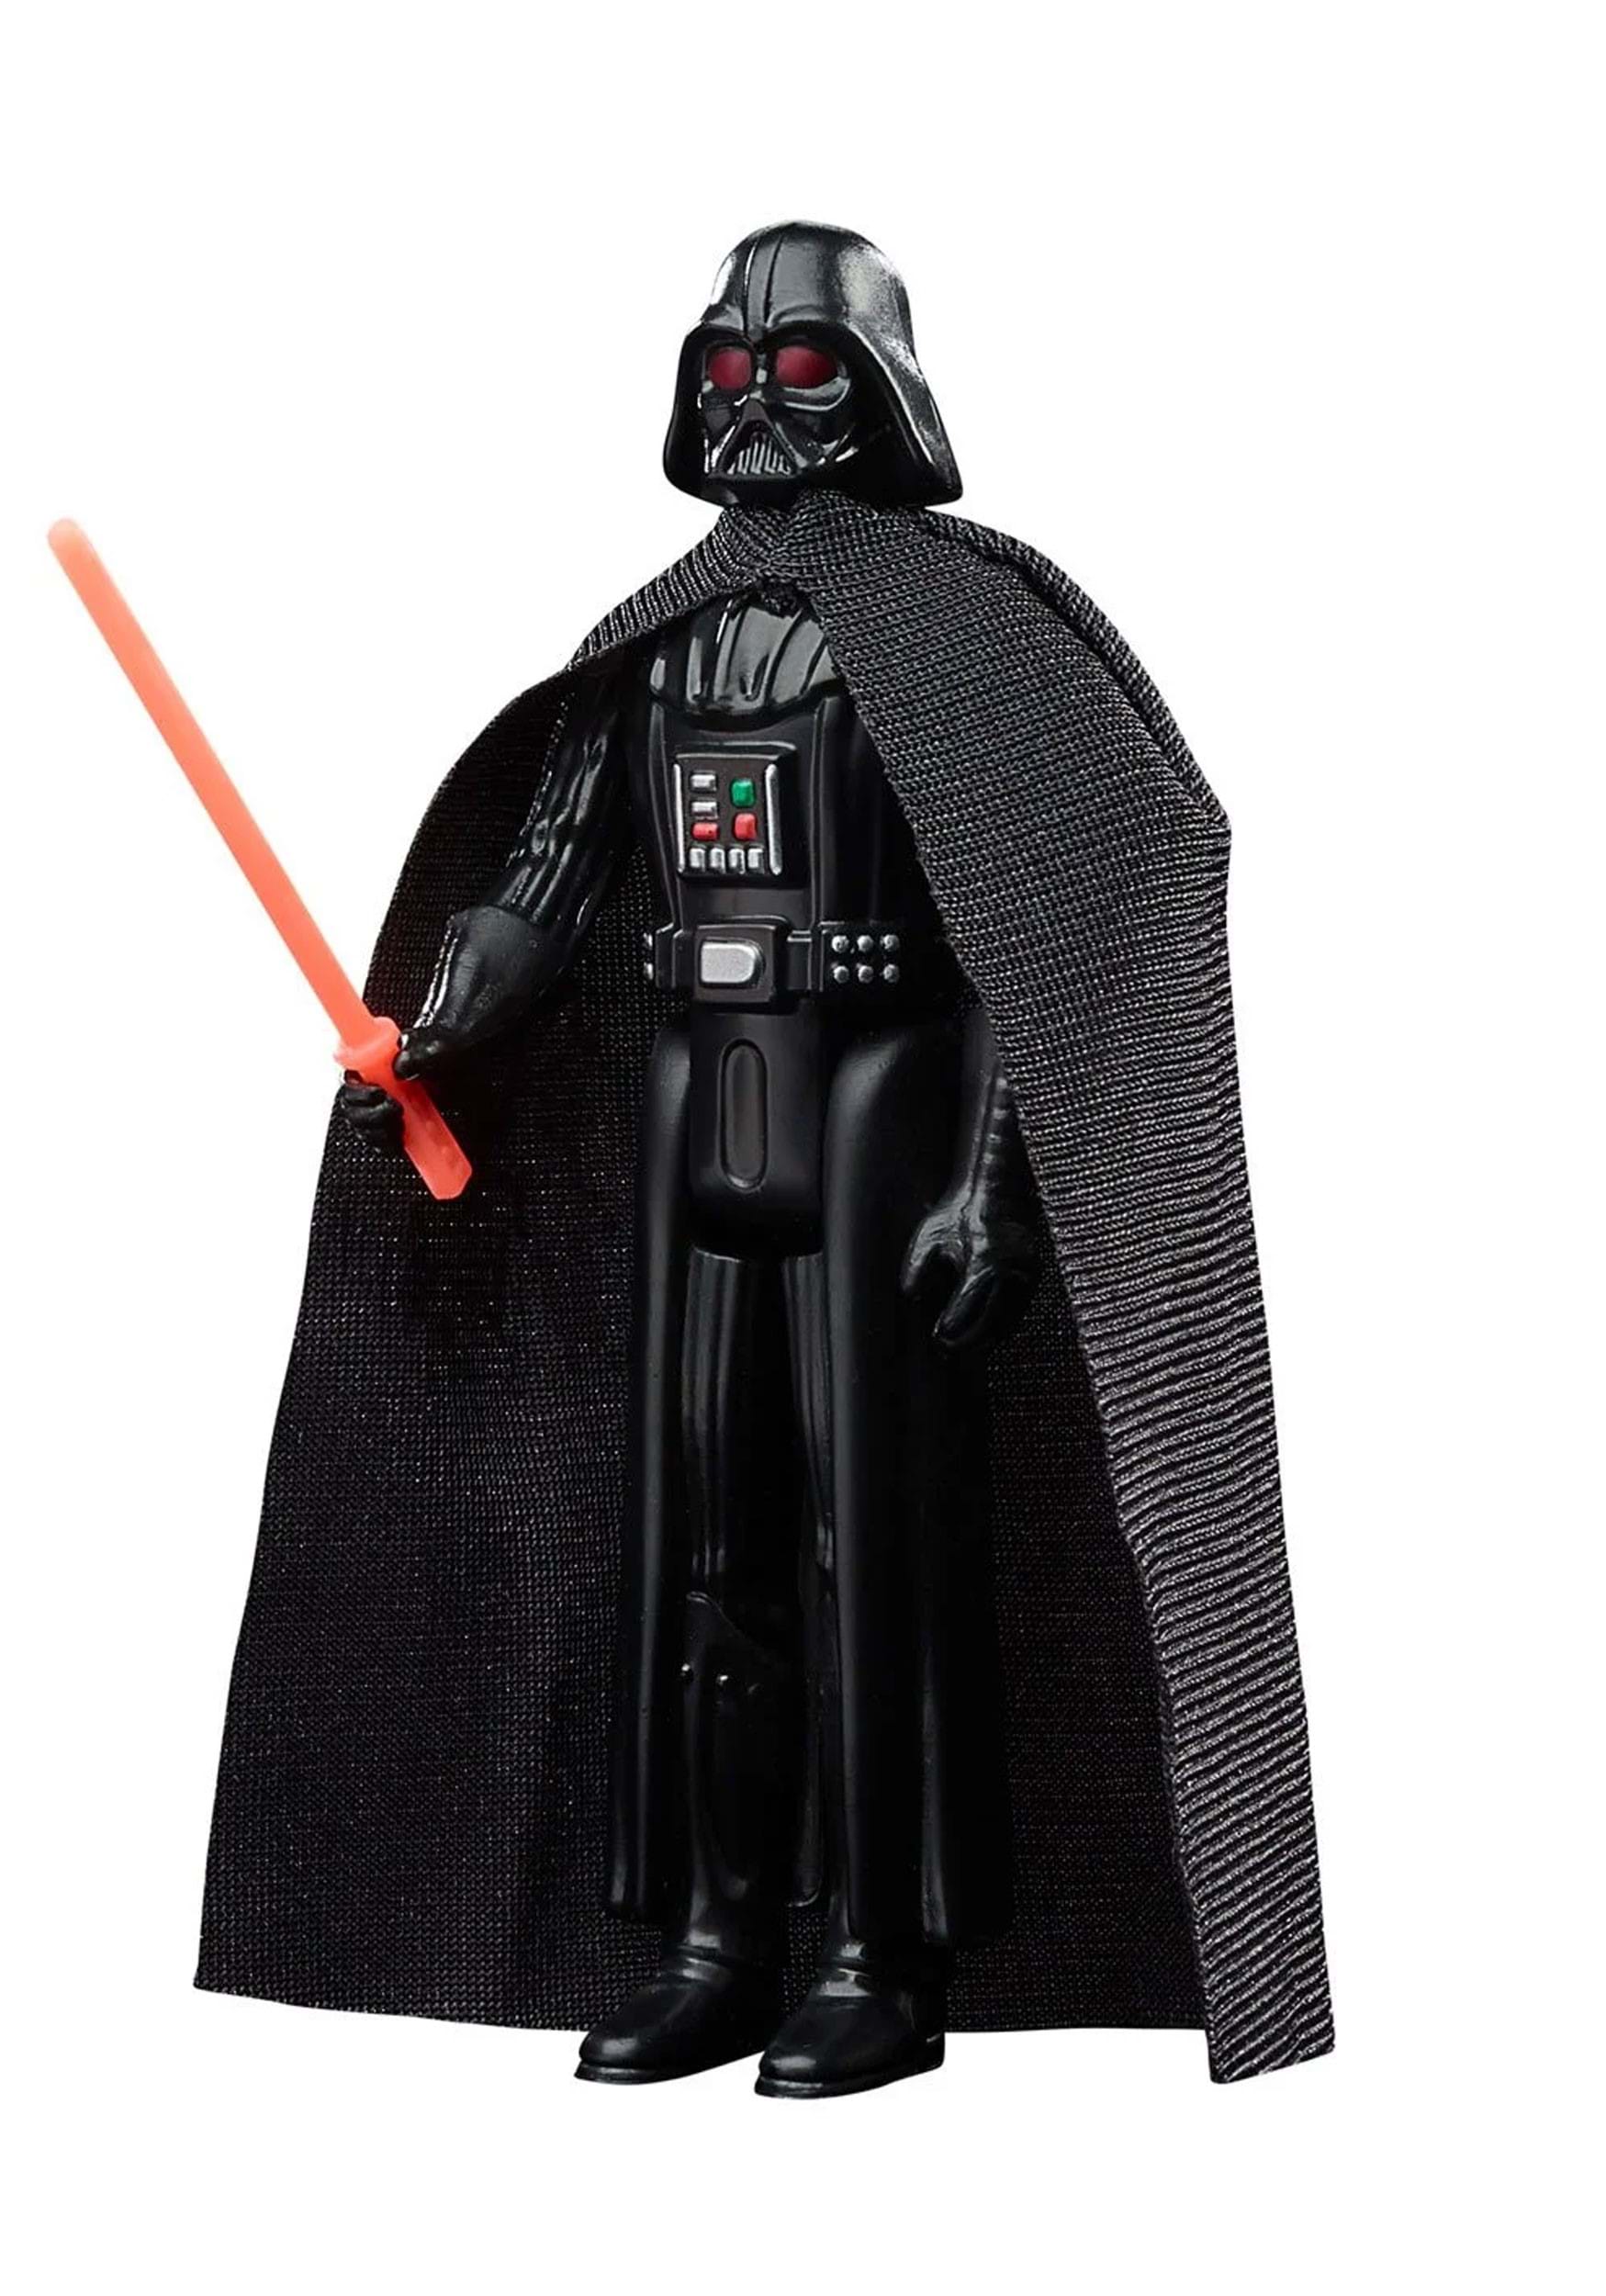 Star Wars The Retro Collection Darth Vader (The Dark Times) Figurine